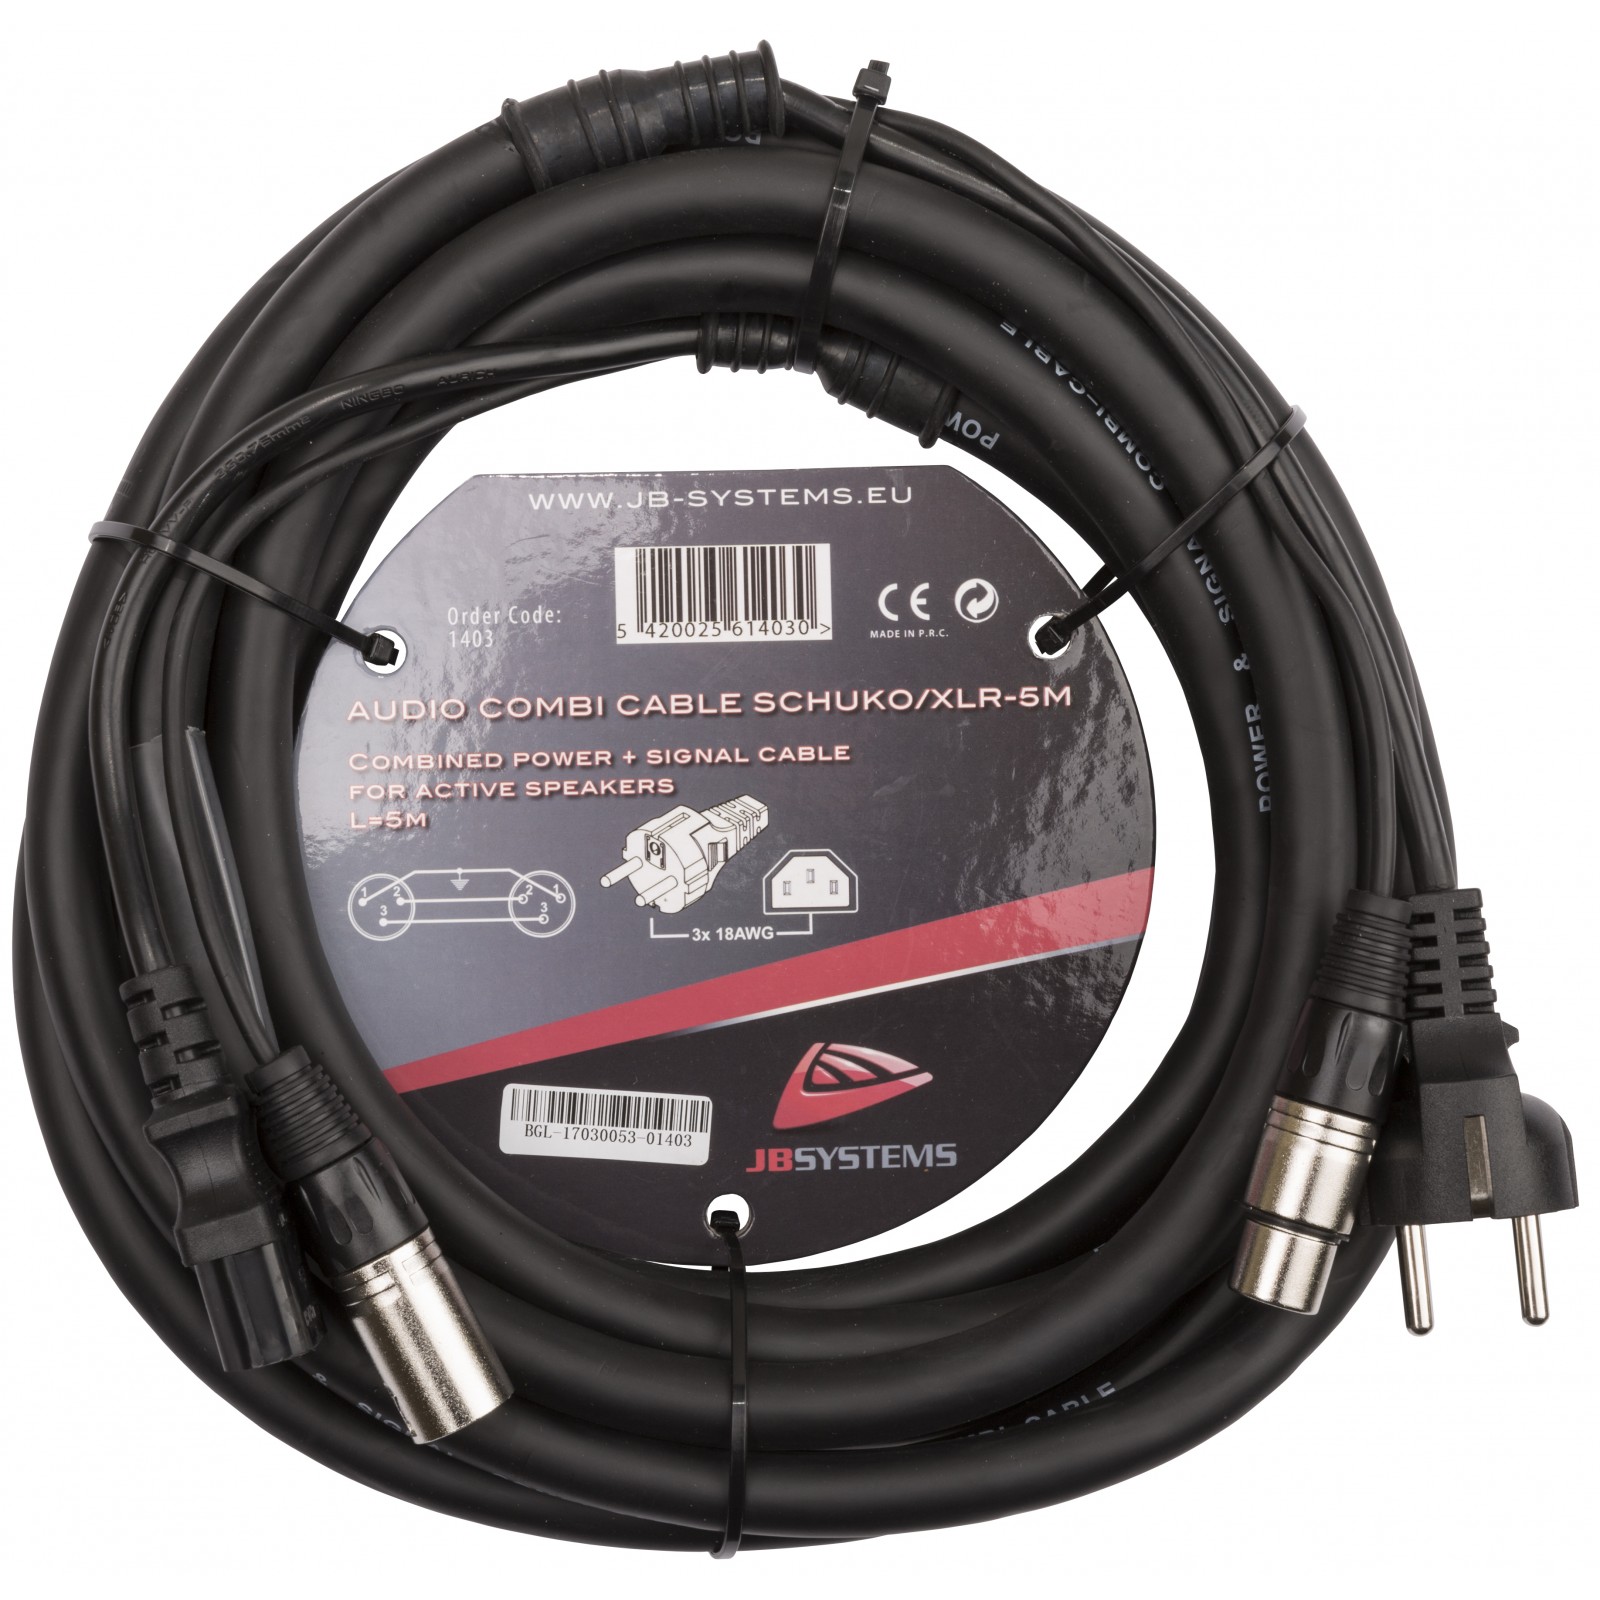 JB Systems Audio Combi Cable SCHUKO/XLR-5M Audio/Strom Hybrid Kabel